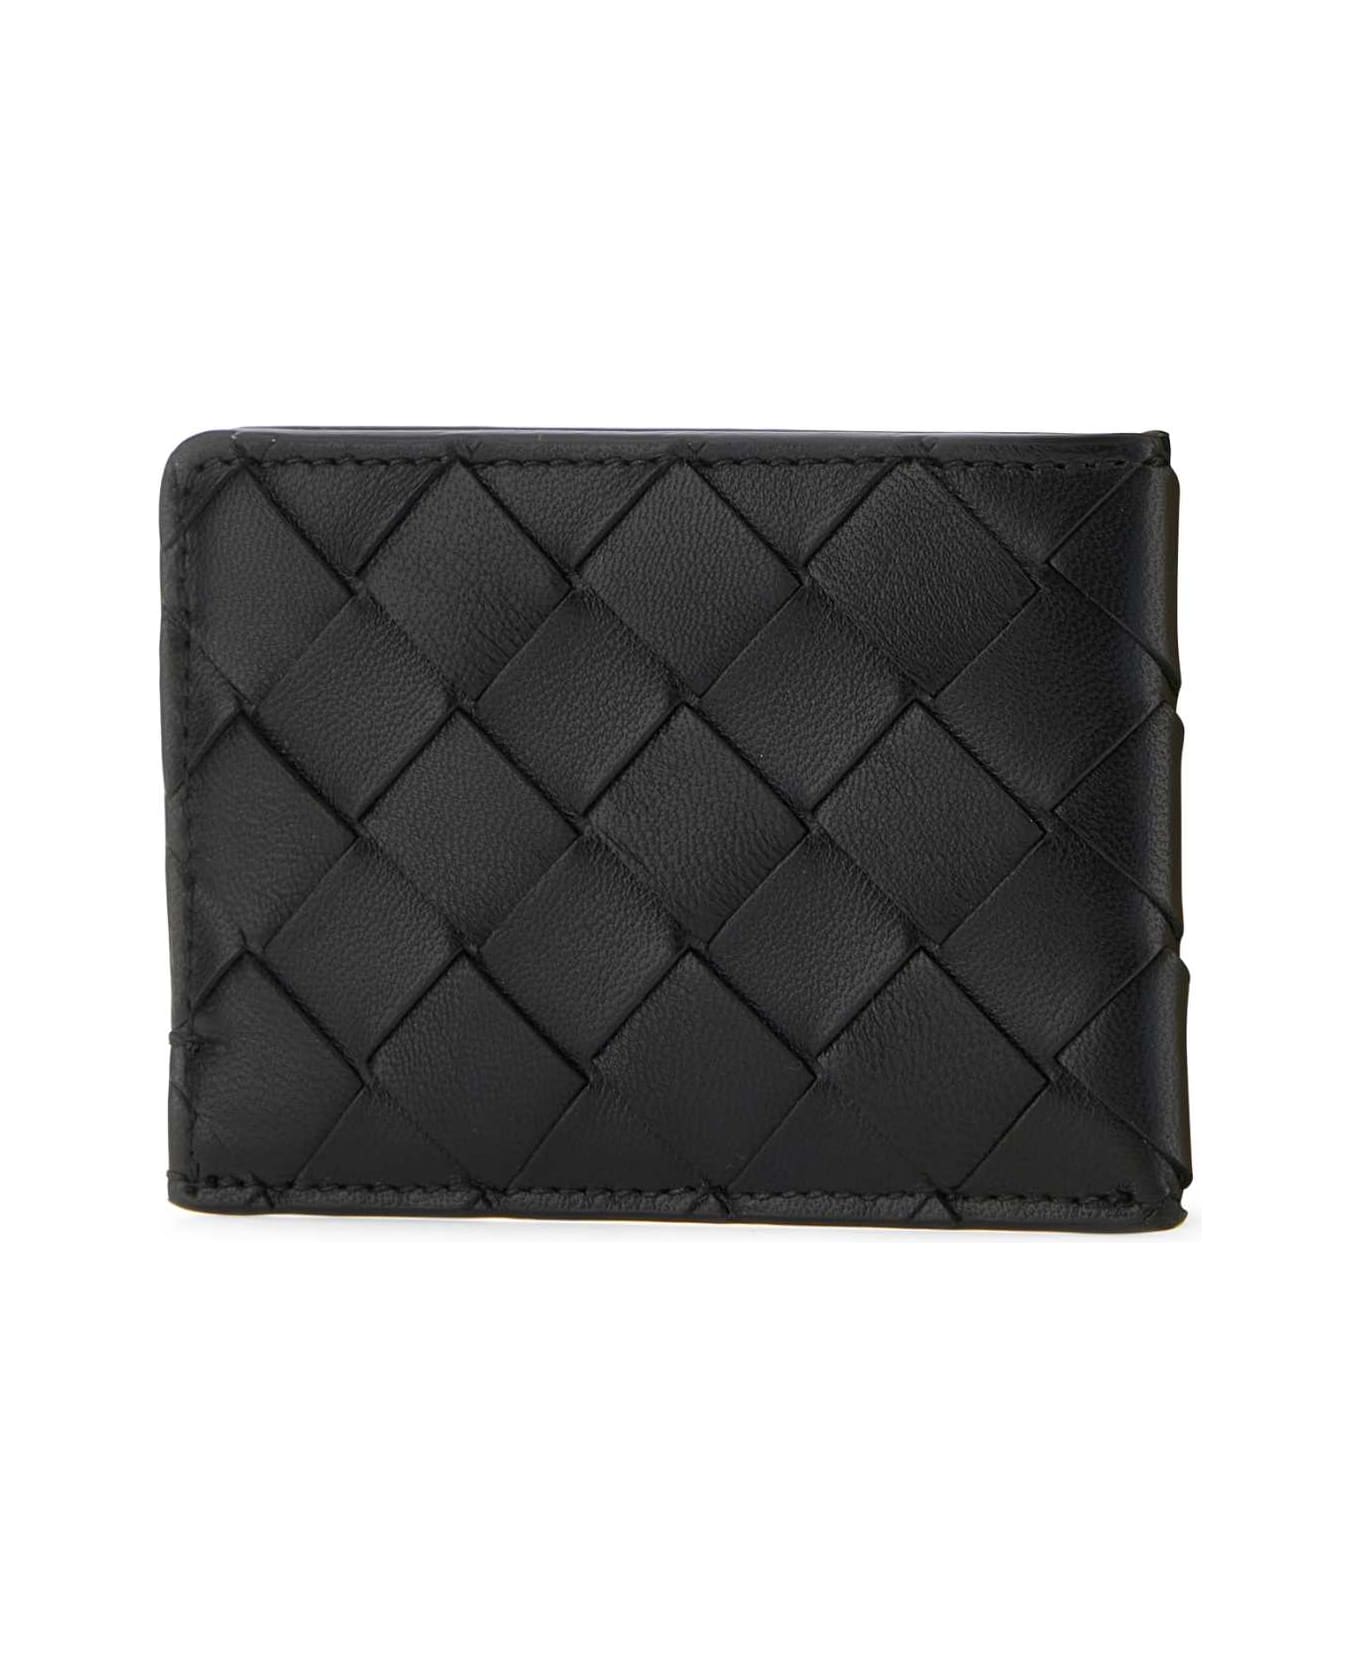 Bottega Veneta Black Leather Cardholder - BLACKGOLD